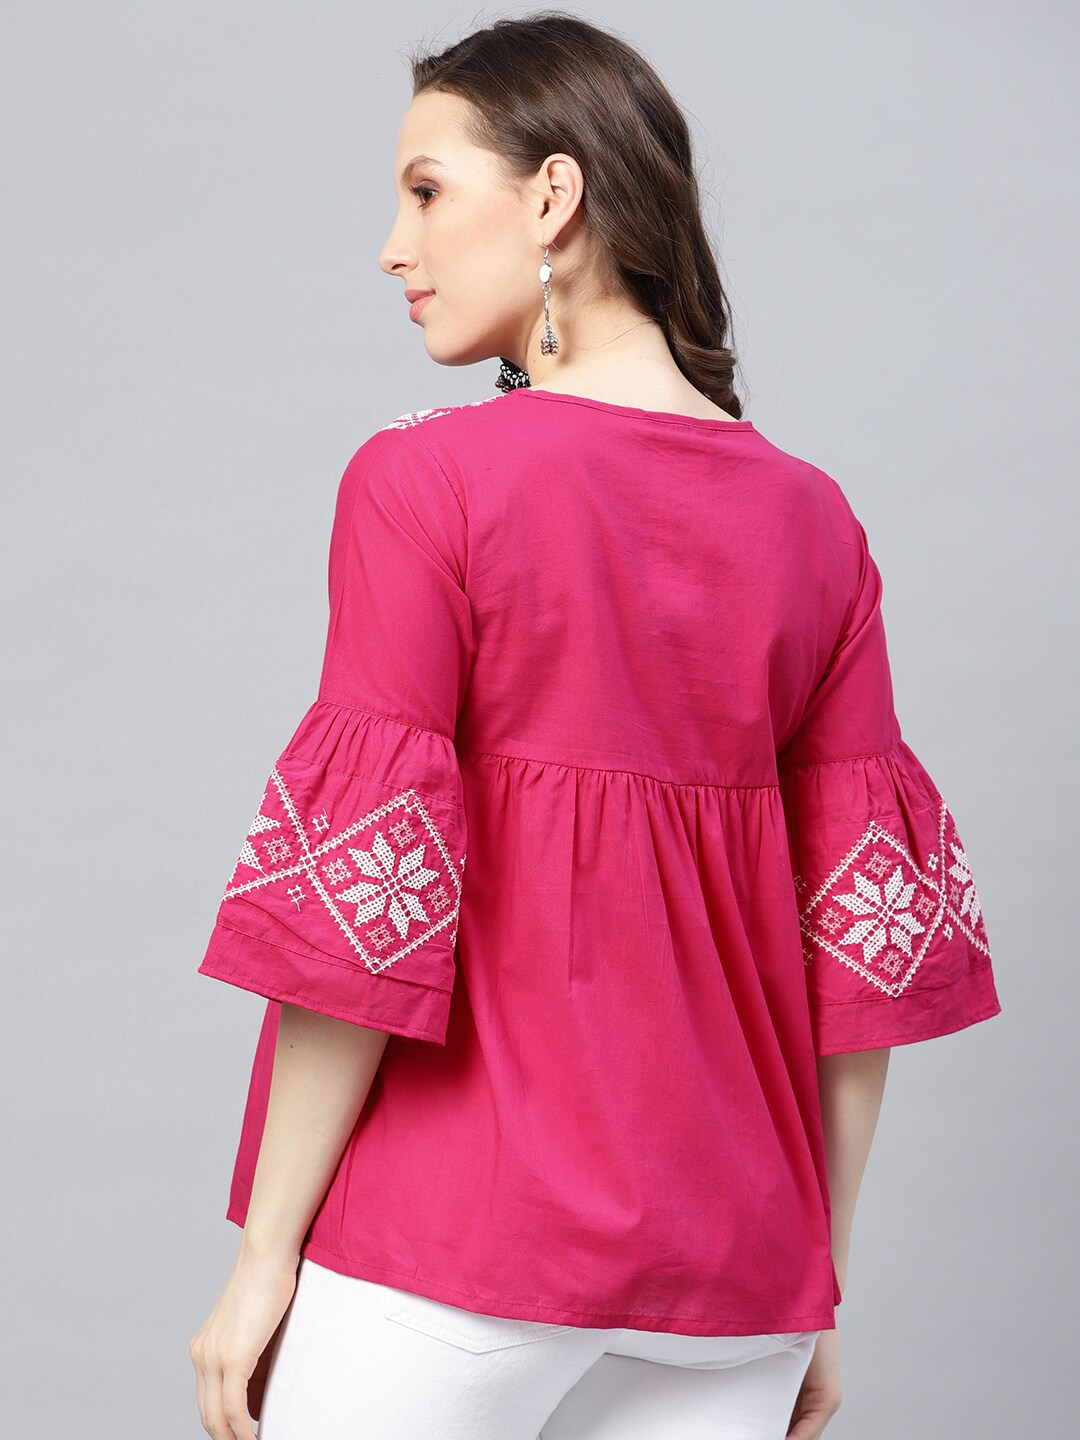 Women's  Pink Embroidered Empire Top - Wahe-NOOR